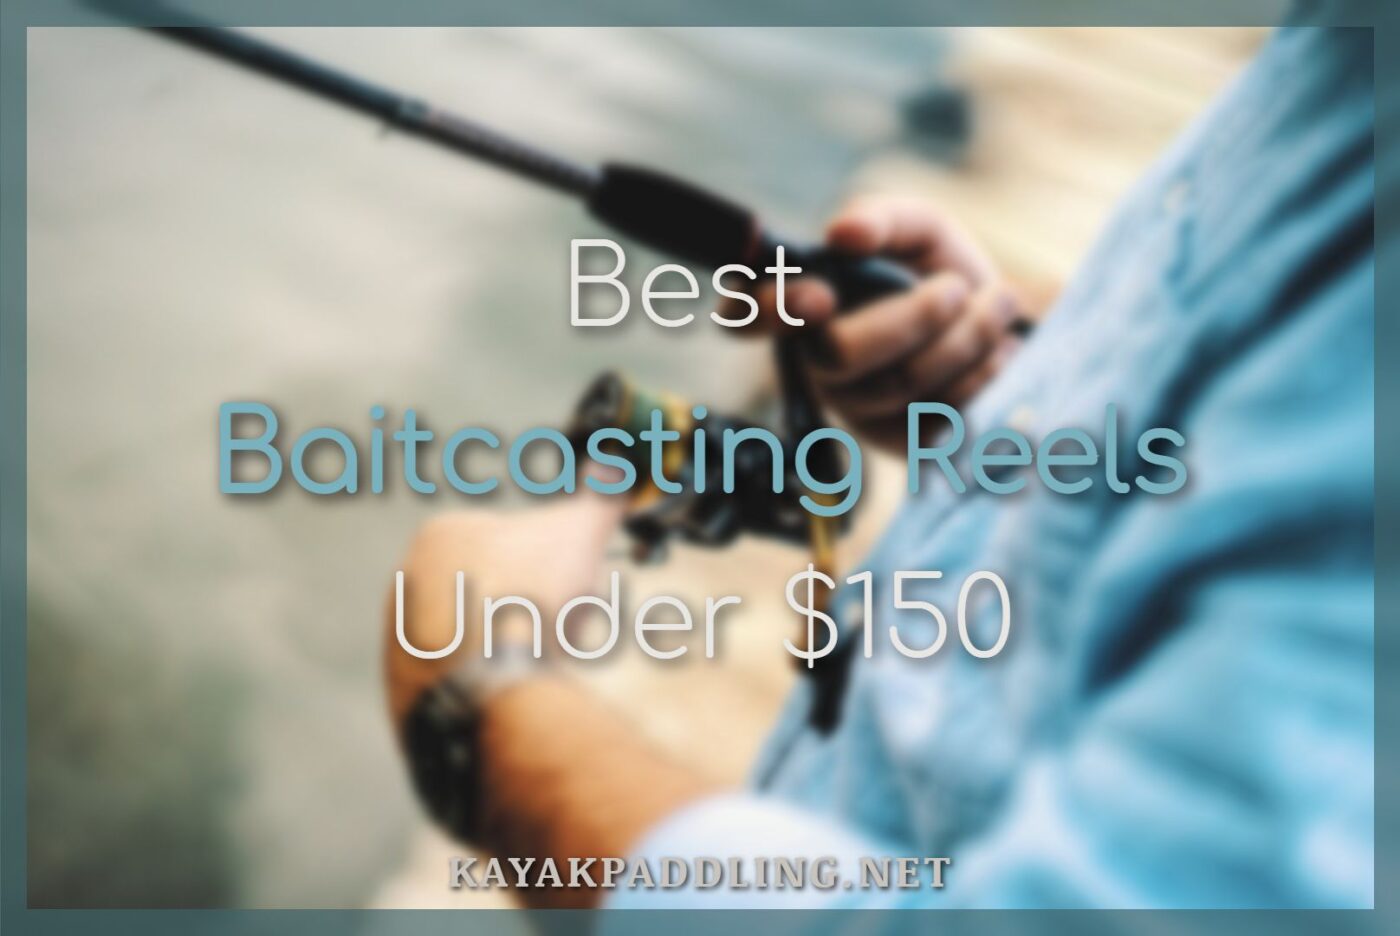 Best Baitcasting Reels Under $150